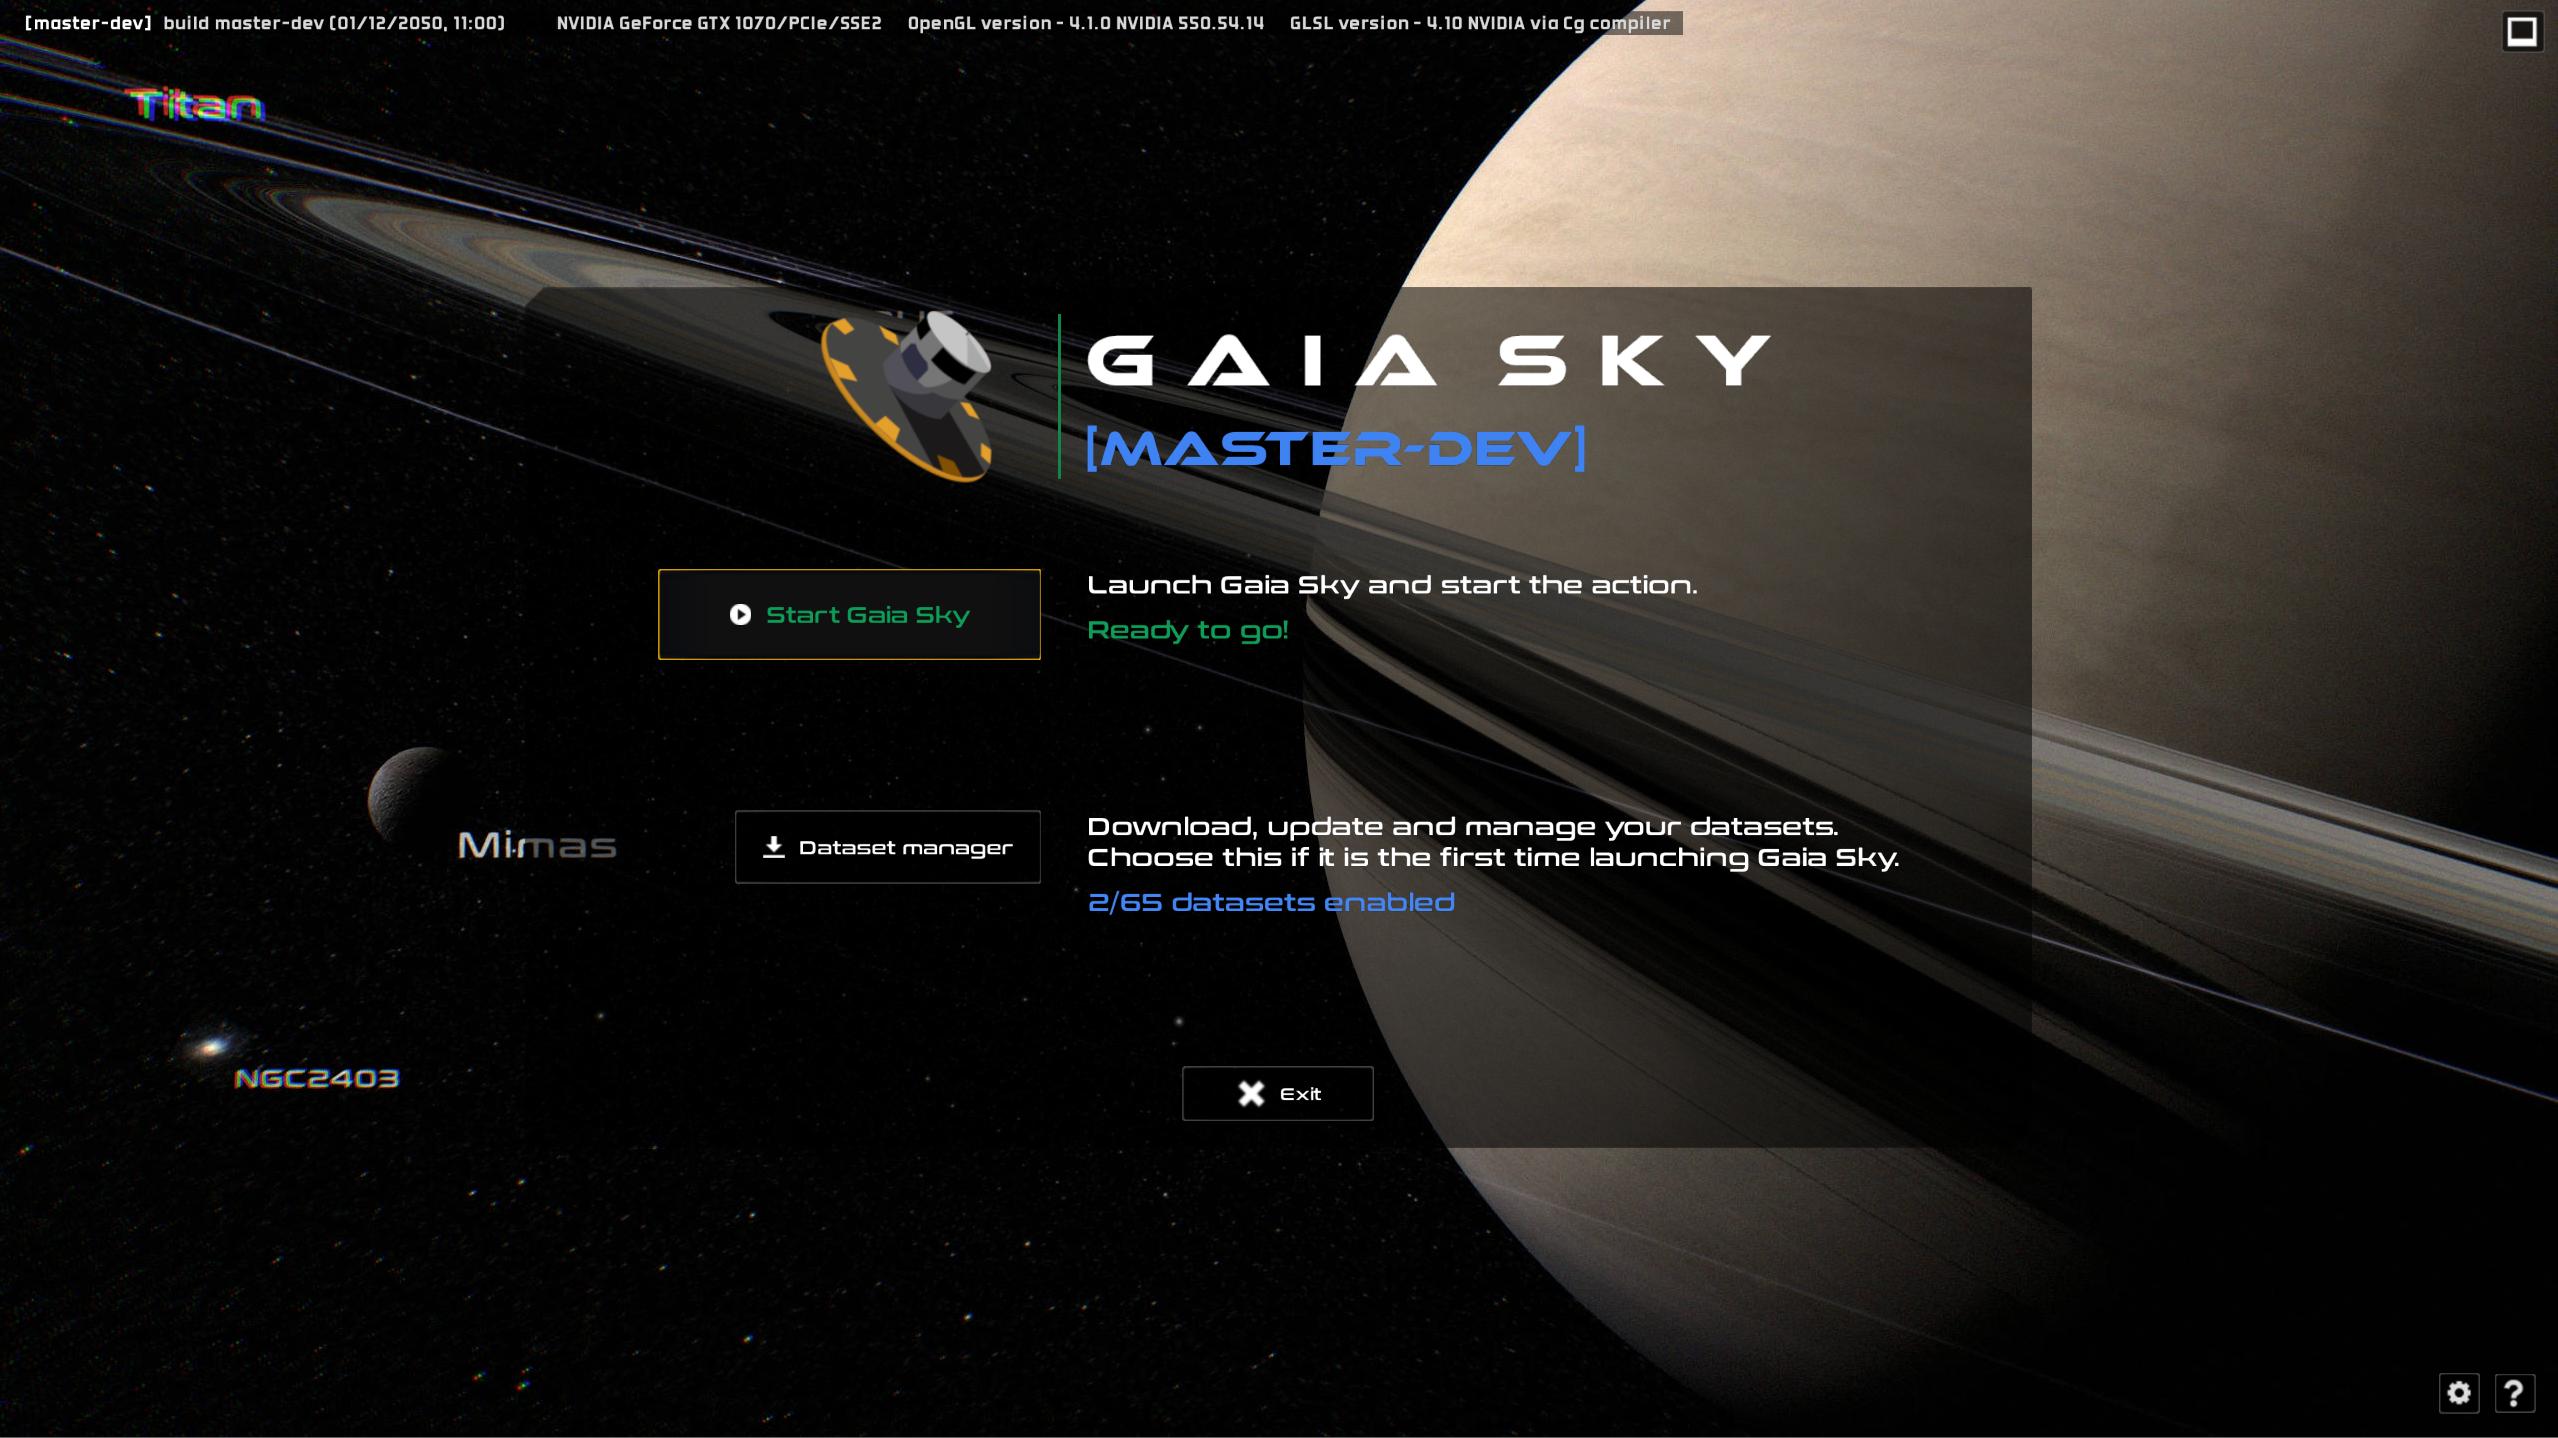 The welcome screen in Gaia Sky